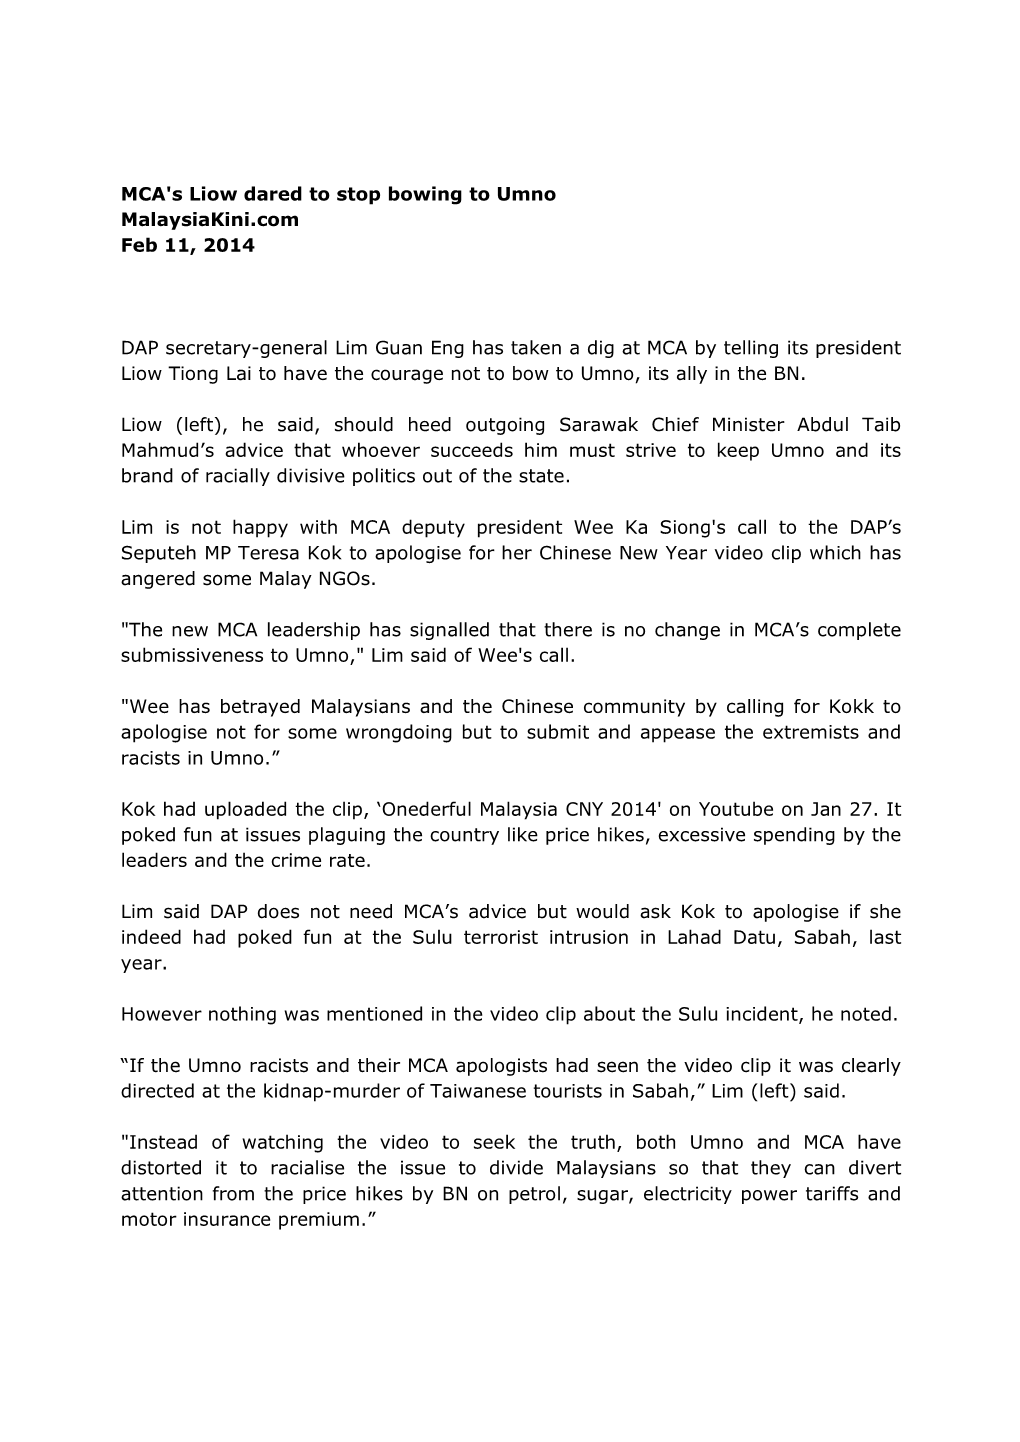 MCA's Liow Dared to Stop Bowing to Umno Malaysiakini.Com Feb 11, 2014